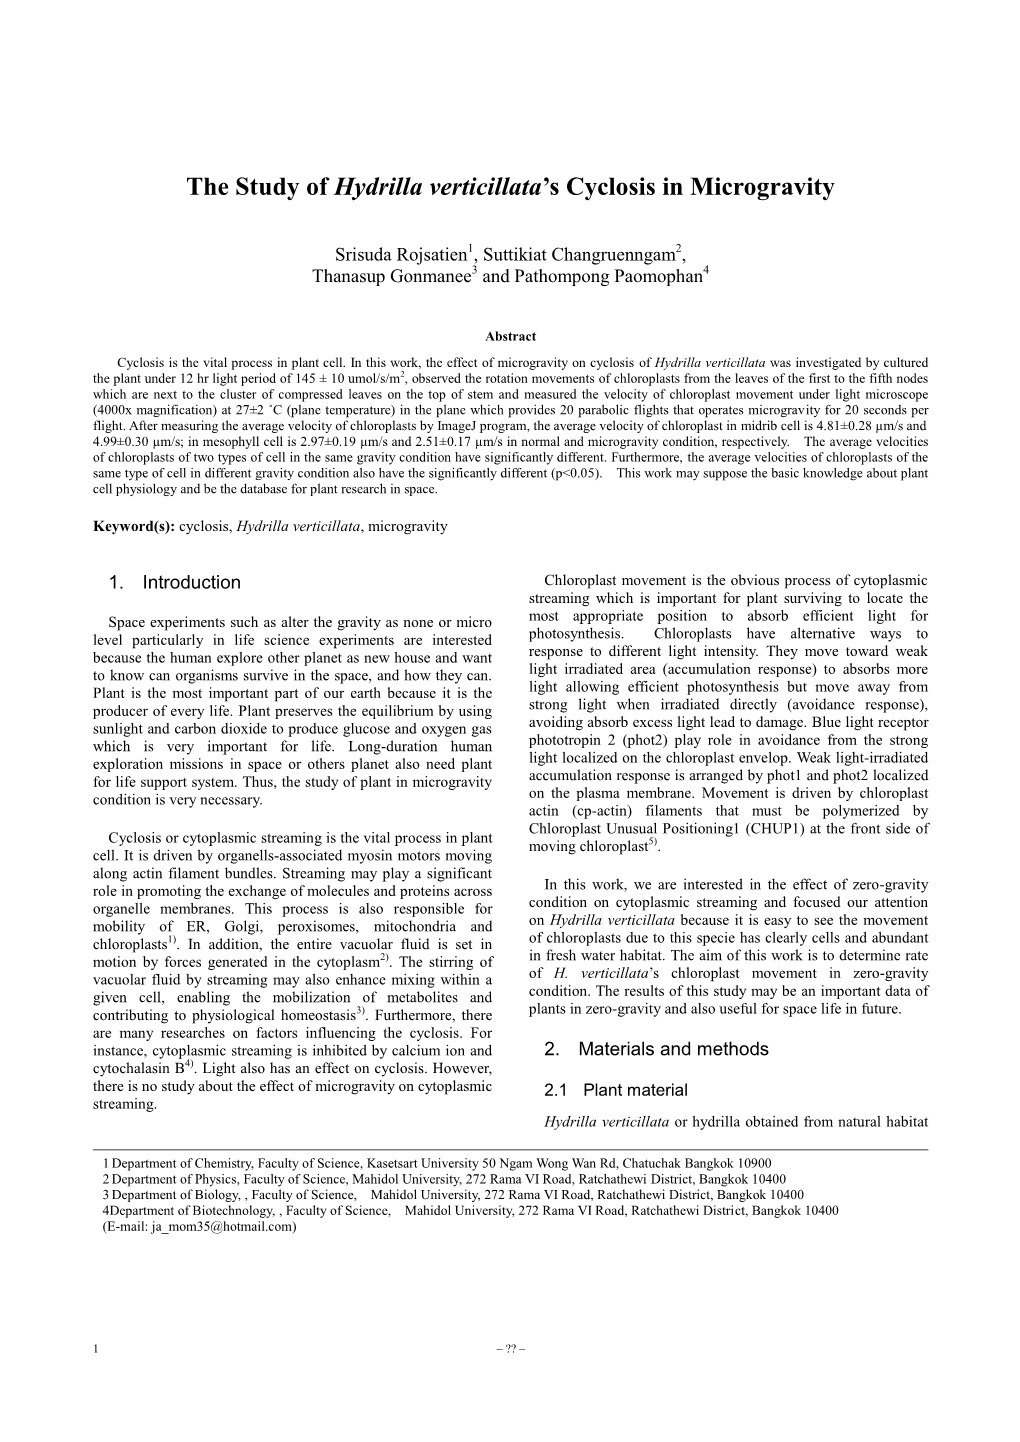 The Study of Hydrilla Verticillata's Cyclosis in Microgravity